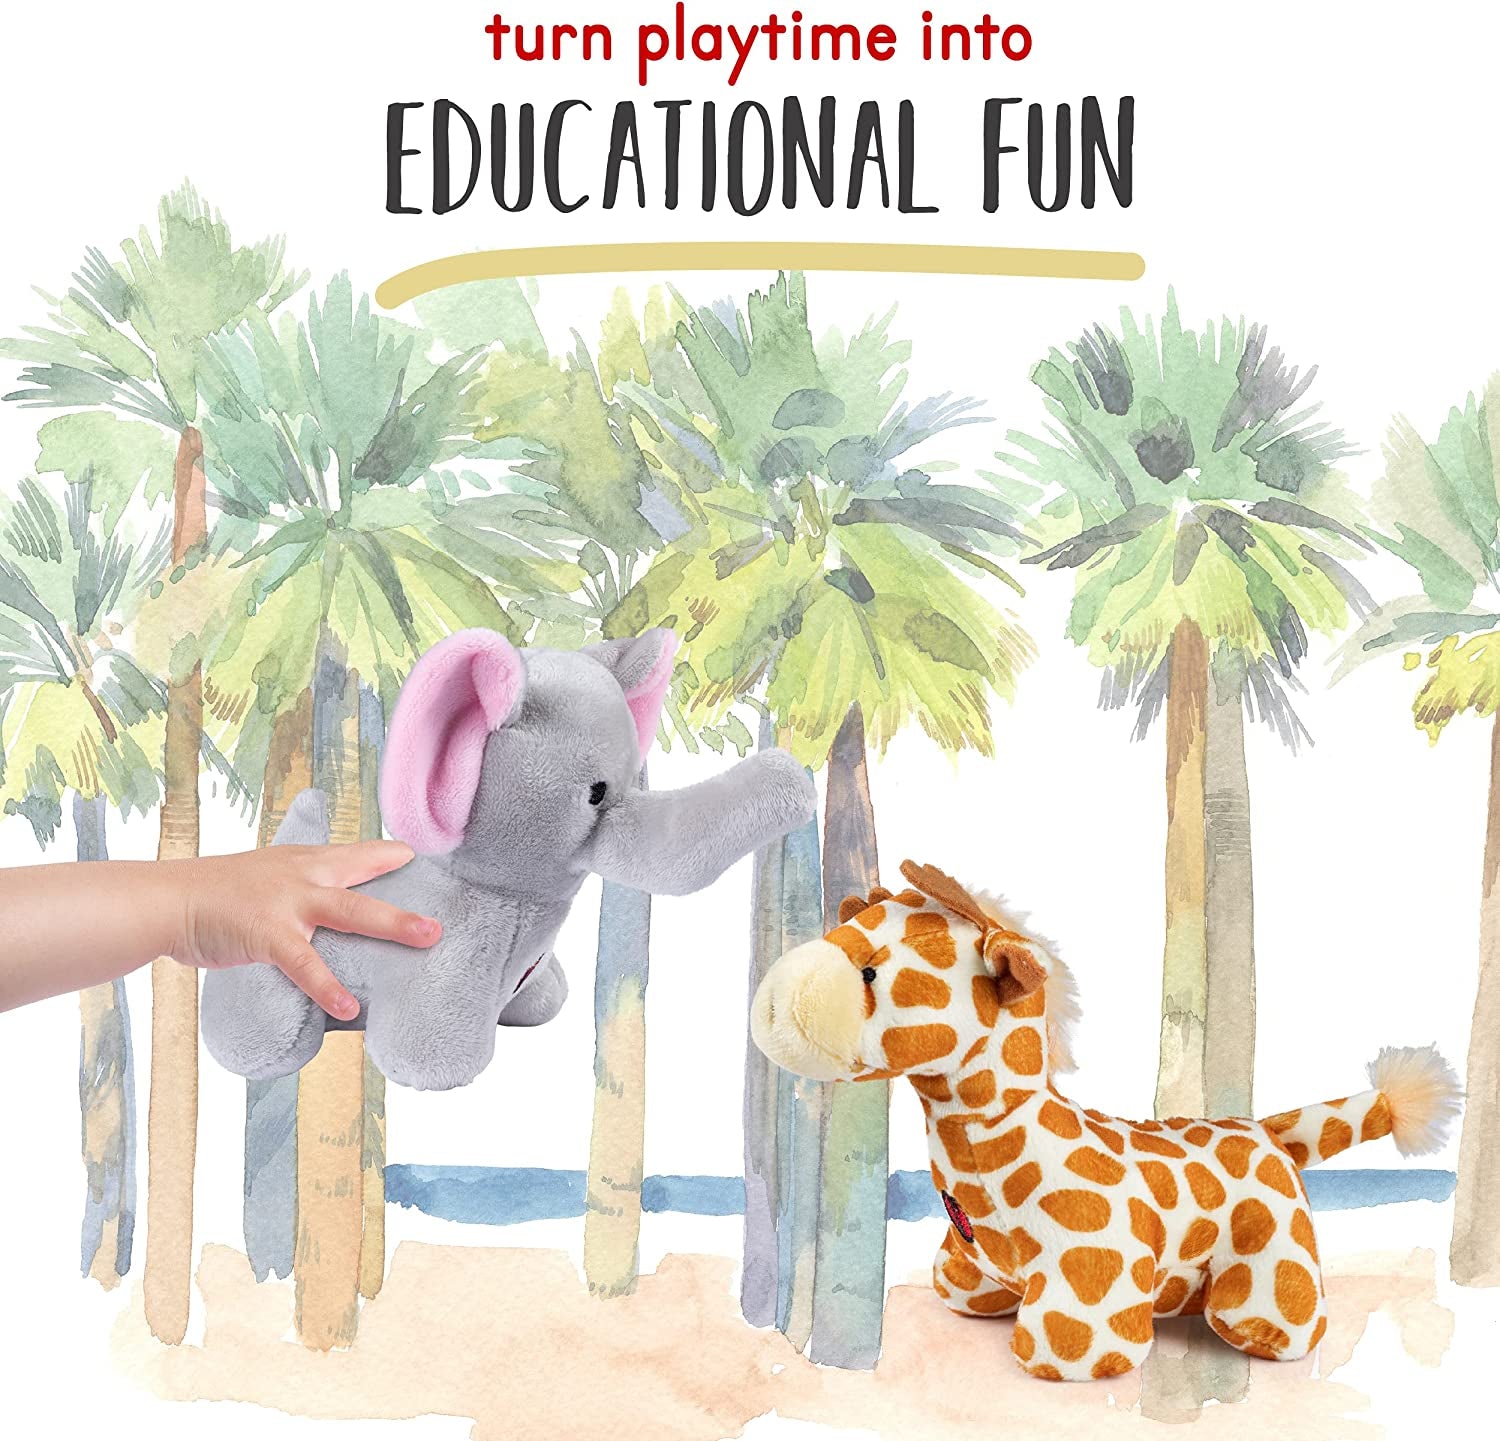 Talking Jungle Plush Toys for Toddlers | Set of 4 Cute Stuffed Animals: Monkey, Elephant, Lion, & Giraffe